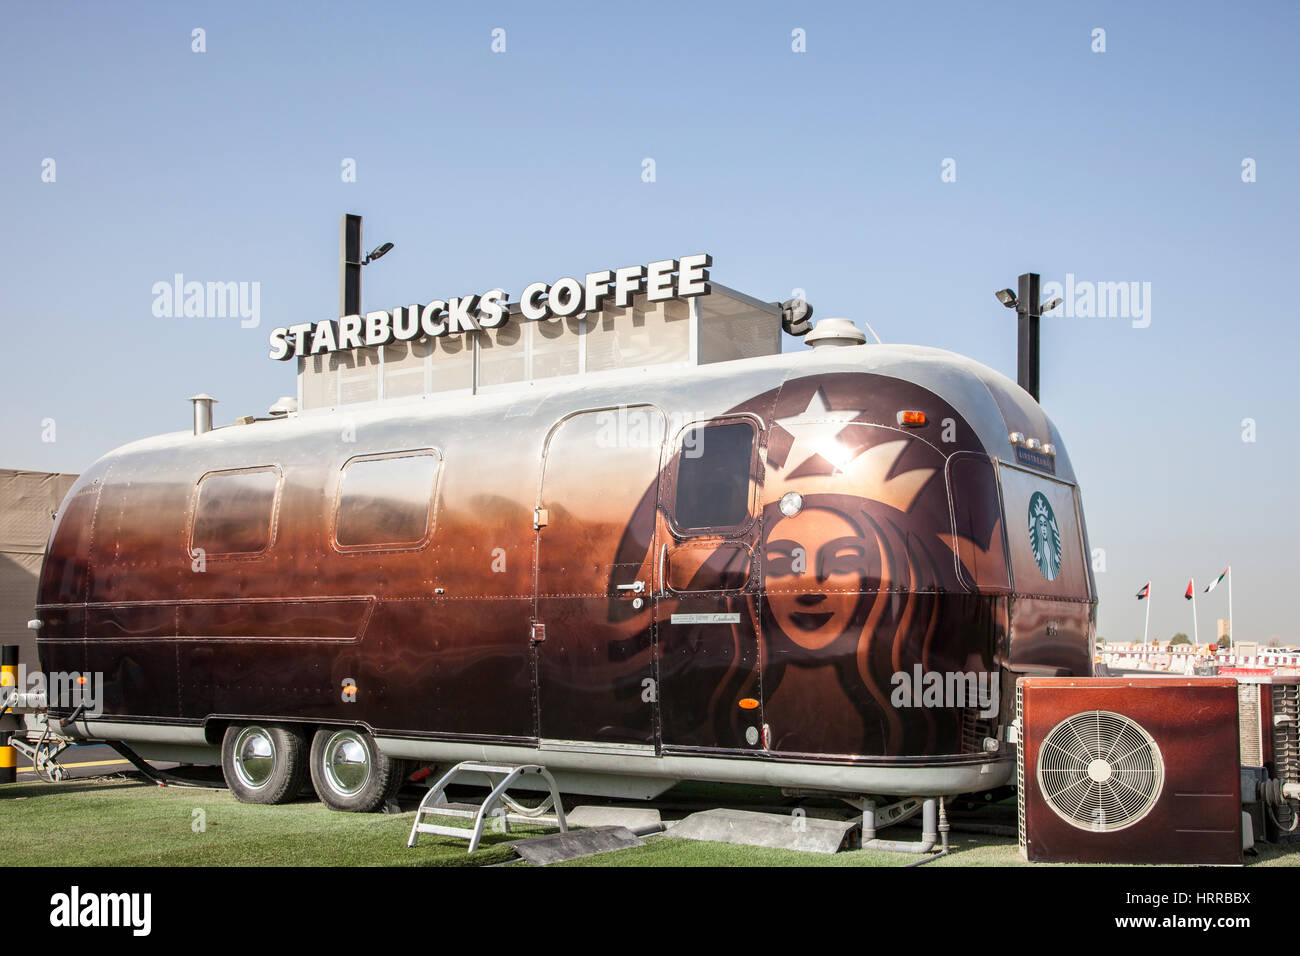 DUBAI, UAE - NOV 27, 2016: Airstream caravan converted to the Starbucks Coffee shop at the Last Exit food trucks park on the E11 highway in United Ara Stock Photo